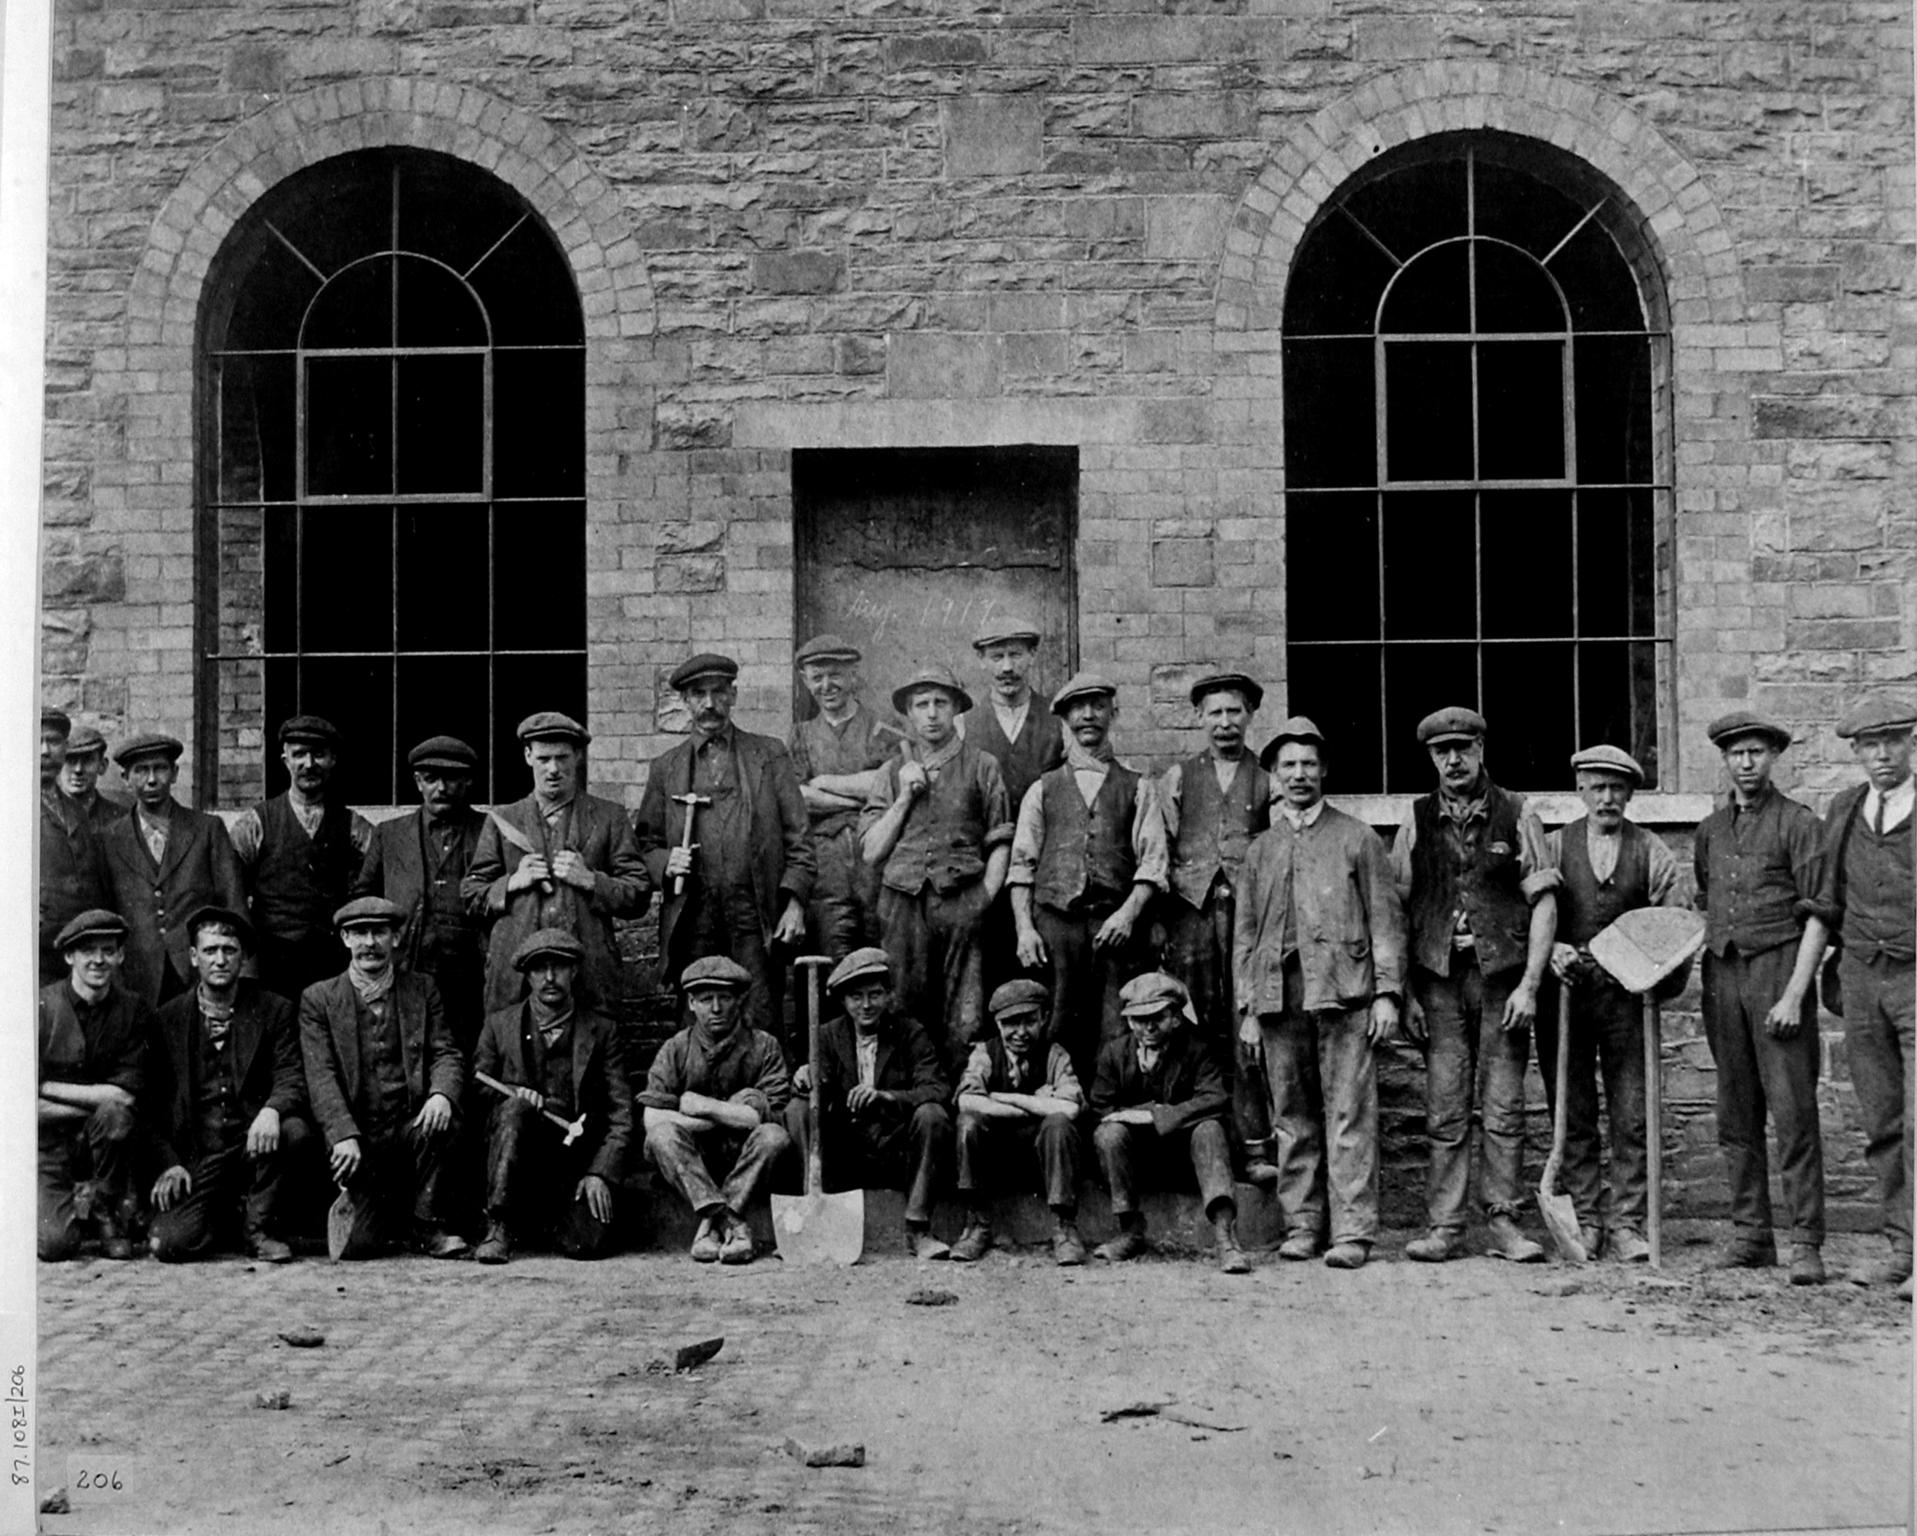 Lewis Merthyr Colliery, photograph